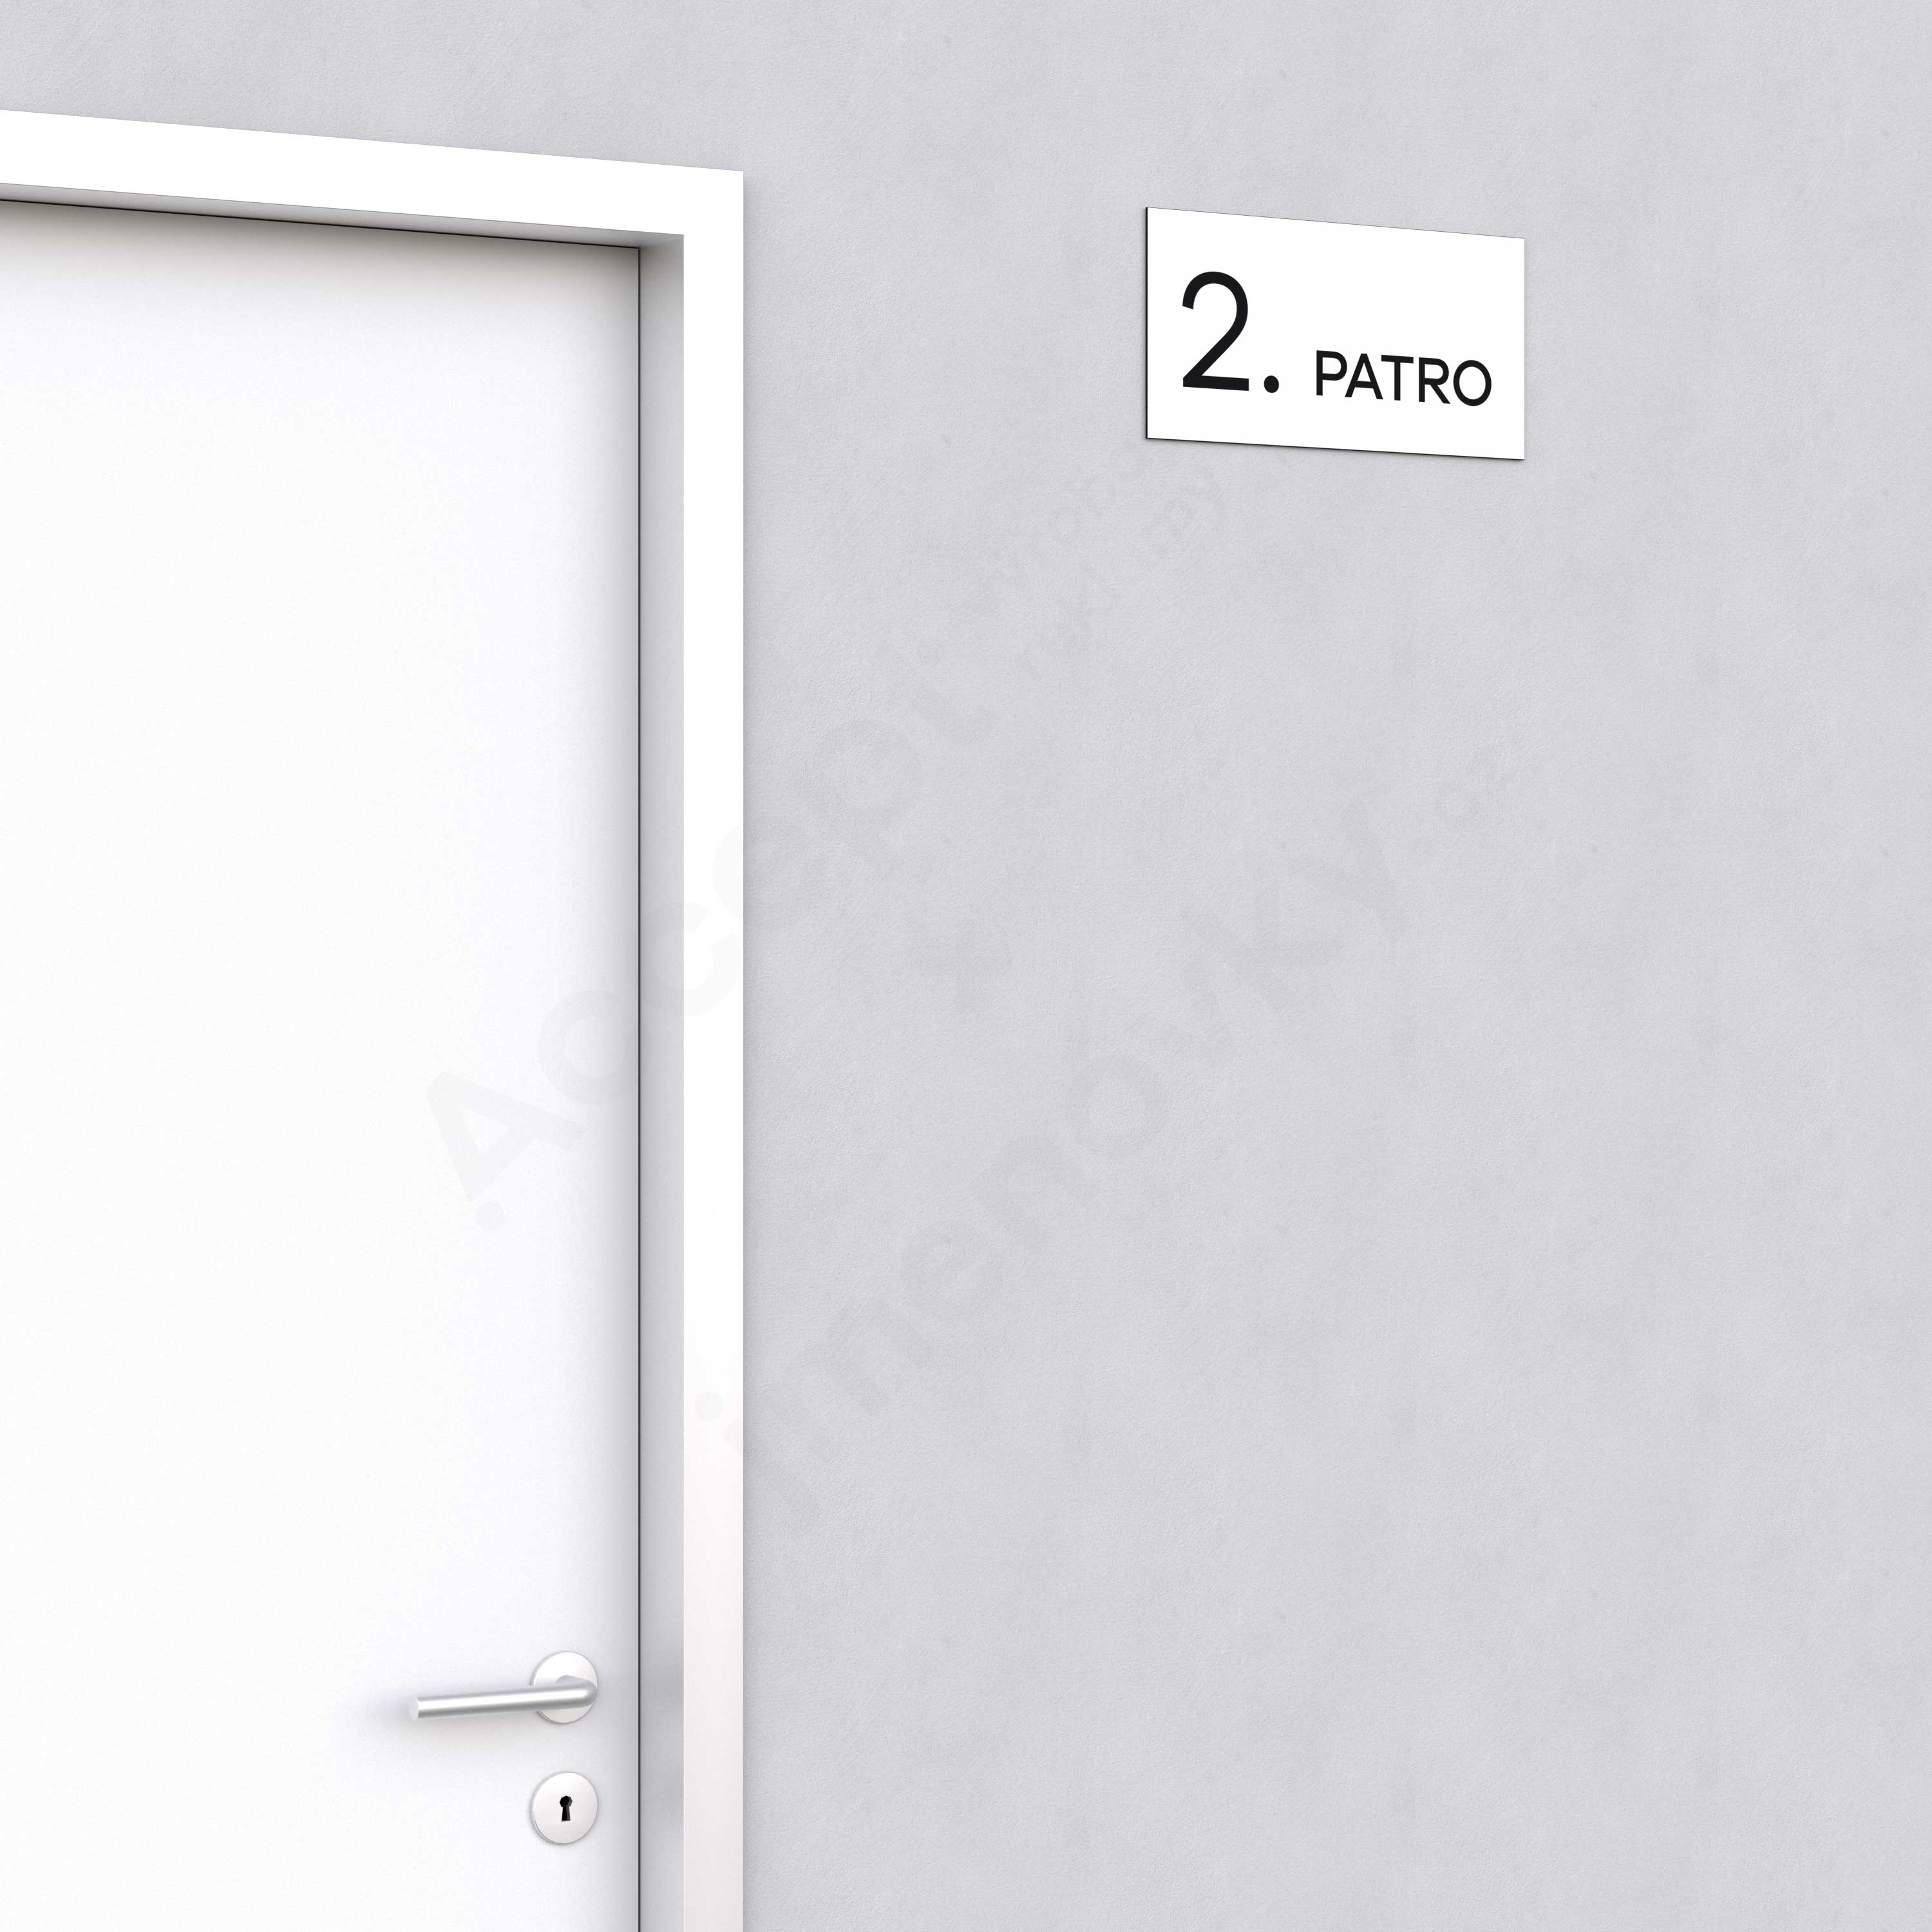 Označení podlaží "2. PATRO" - bílá tabulka - černý popis - náhled